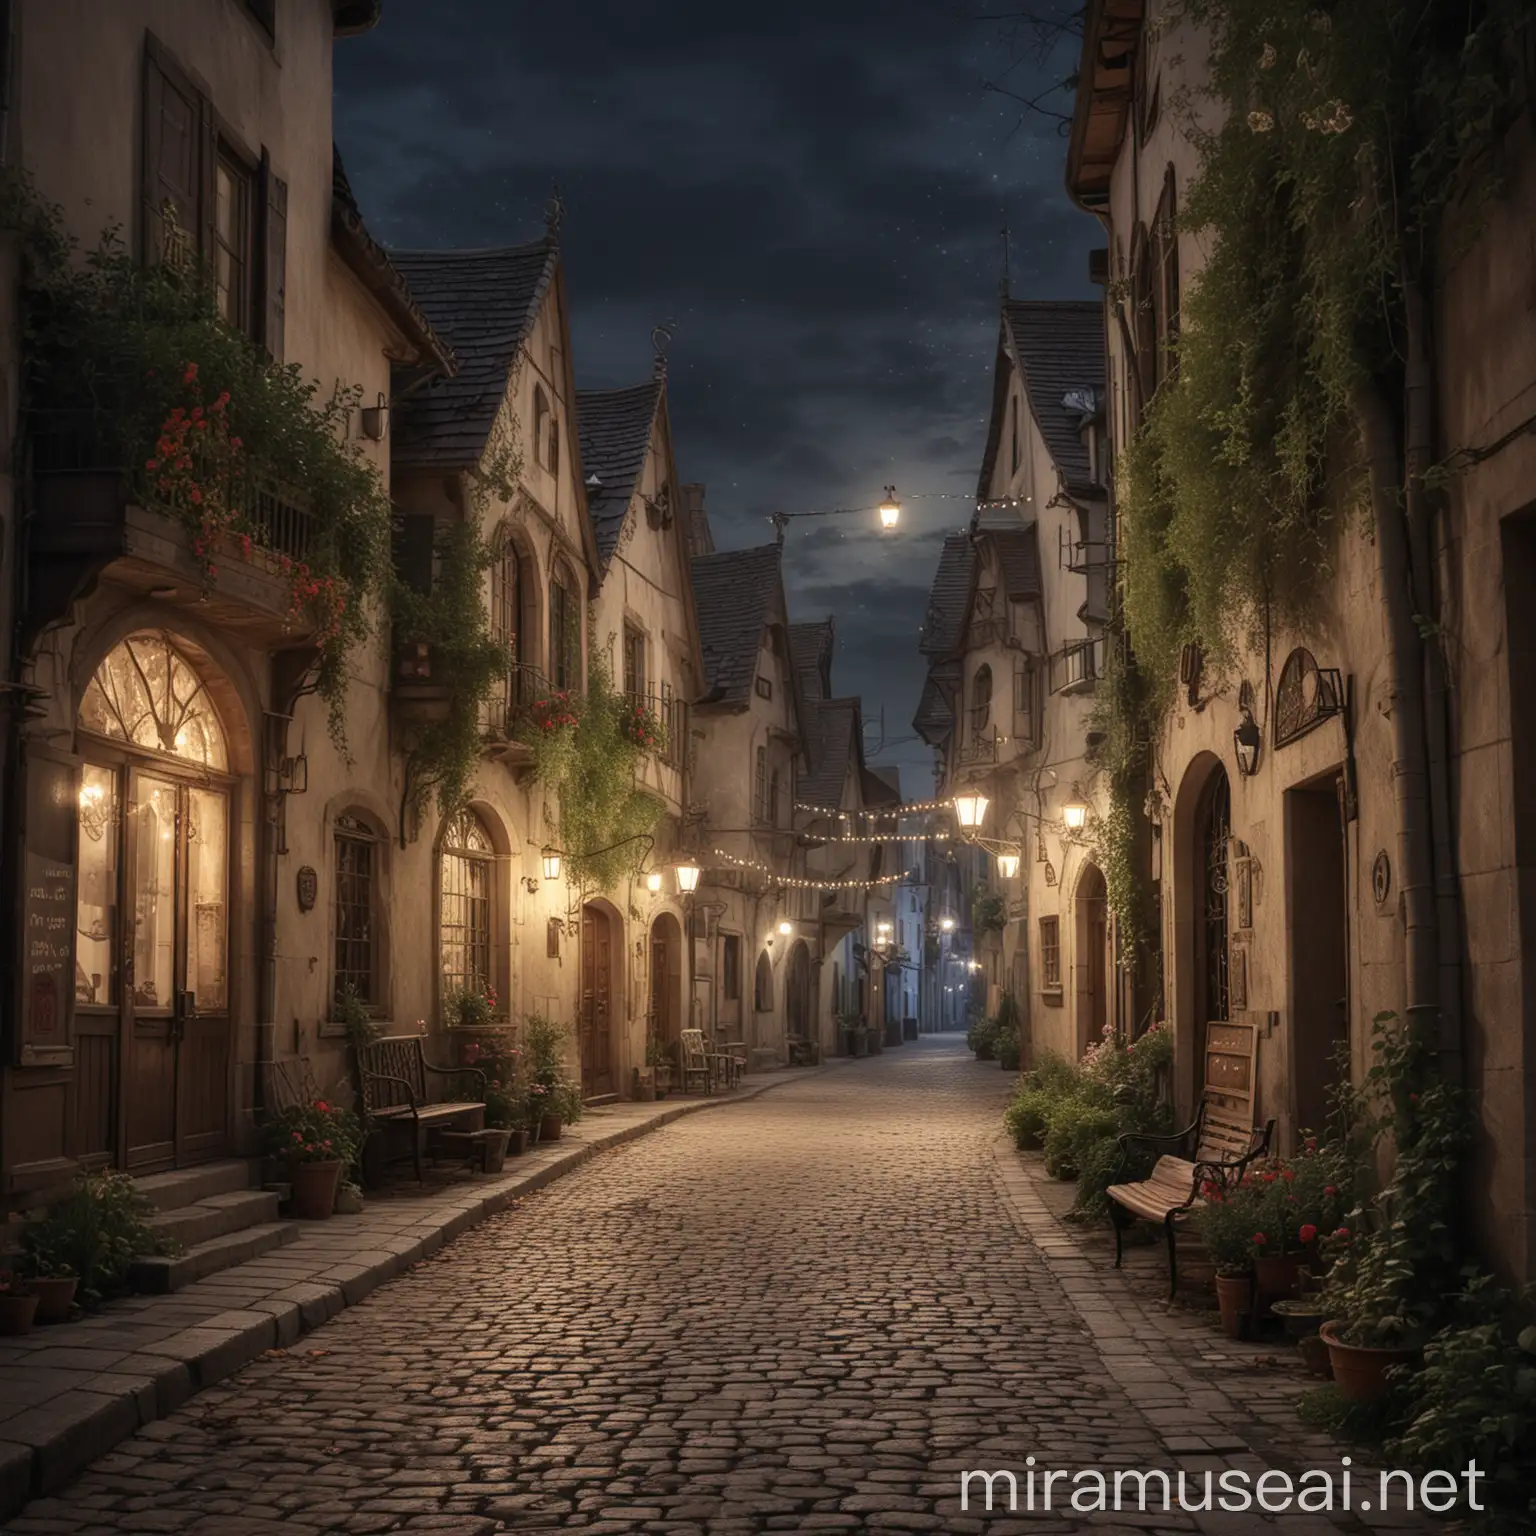 Enchanting Fairy Tale Scene on a Whimsical Street